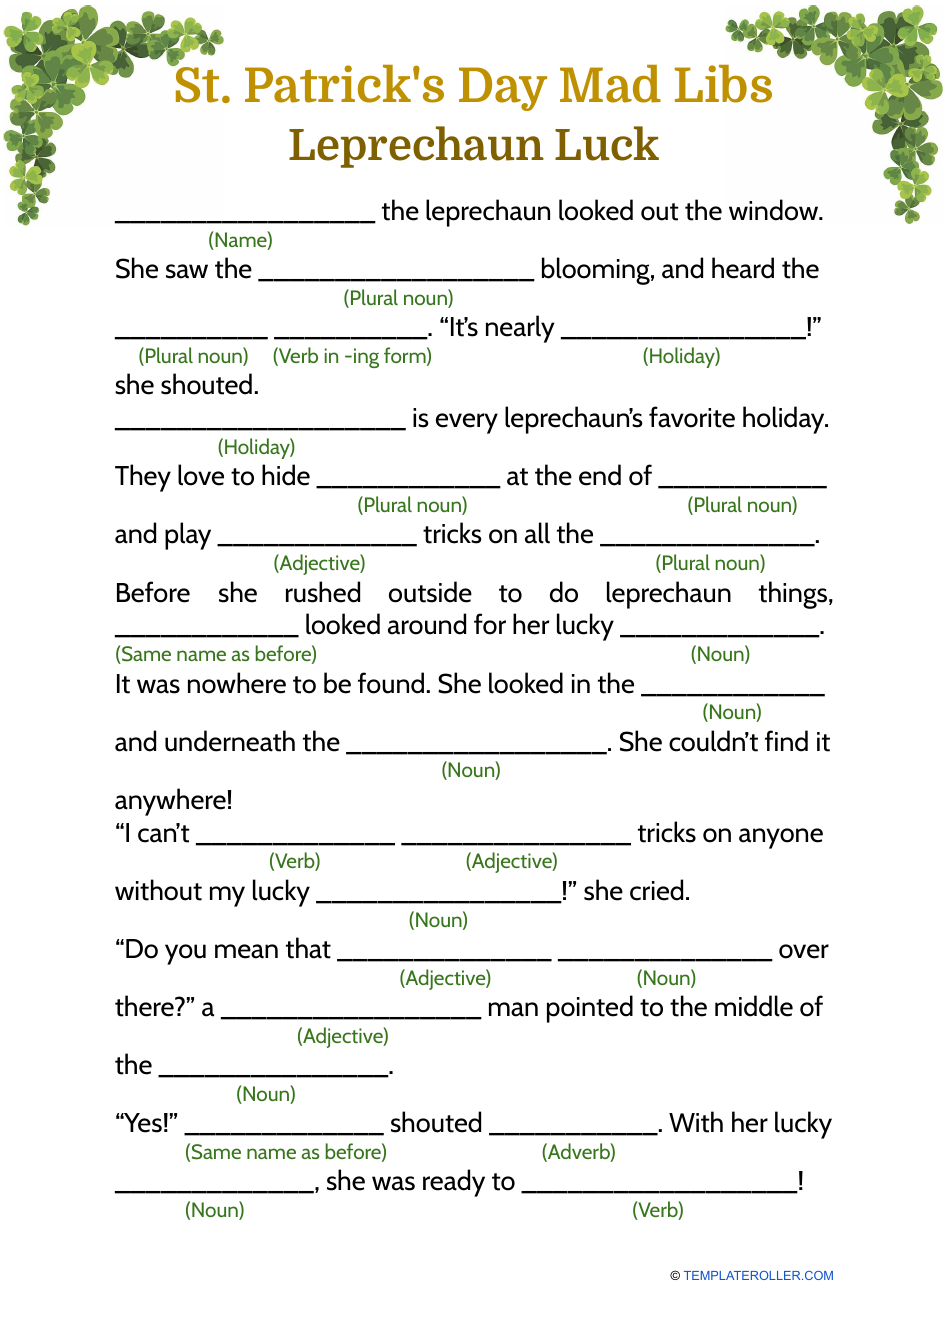 St Patrick s Day Mad Libs Leprechaun Luck Download Printable PDF